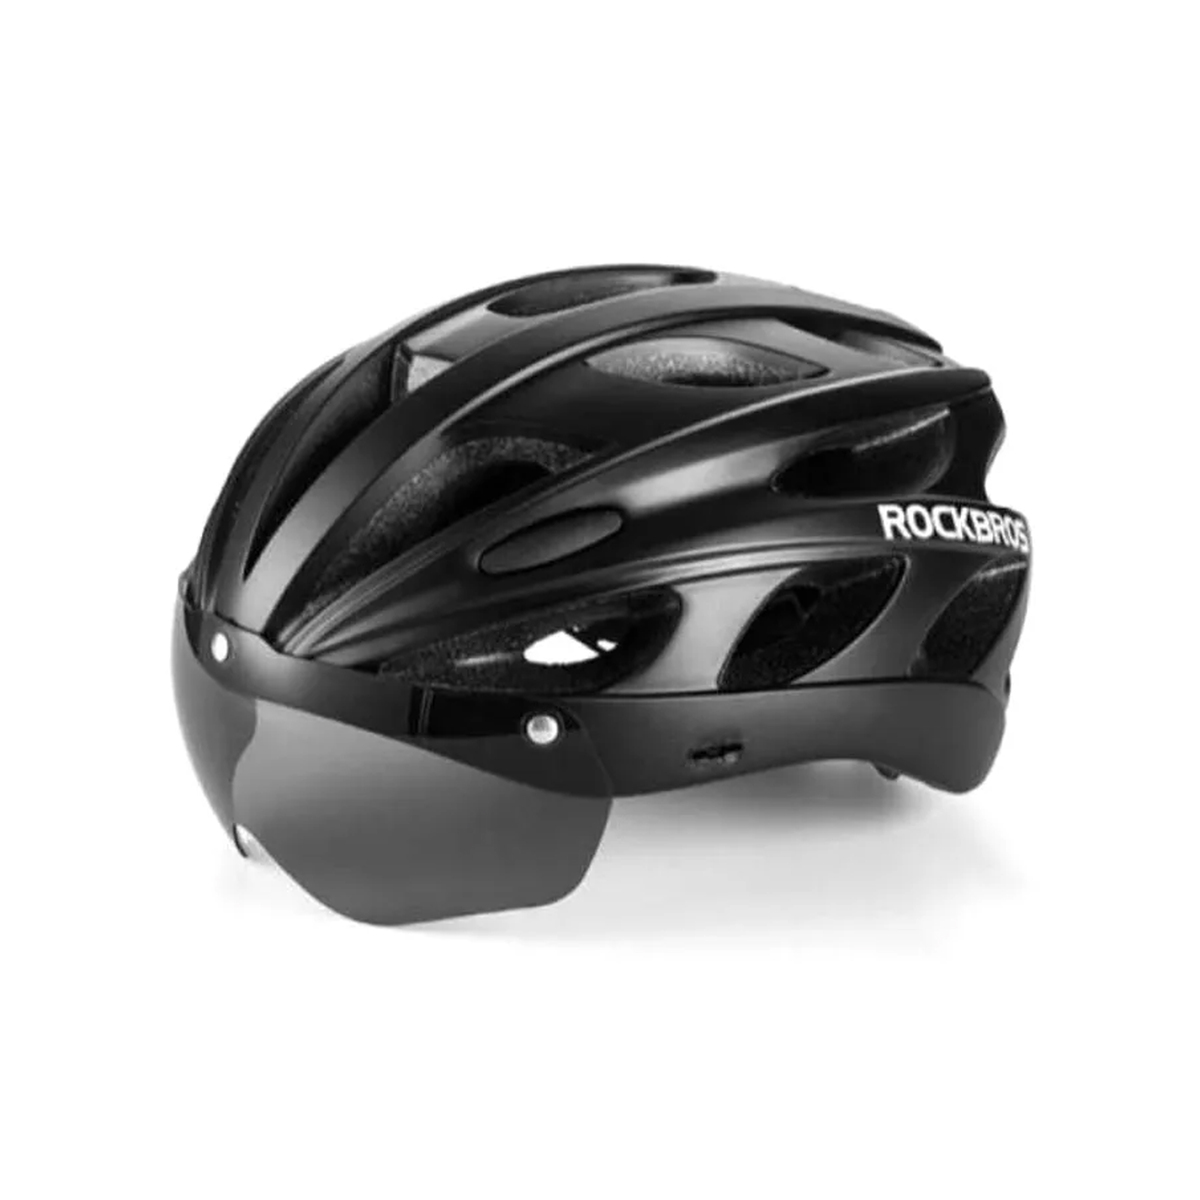 Rockbros Cycling Helmet With Goggle TT-16-BK